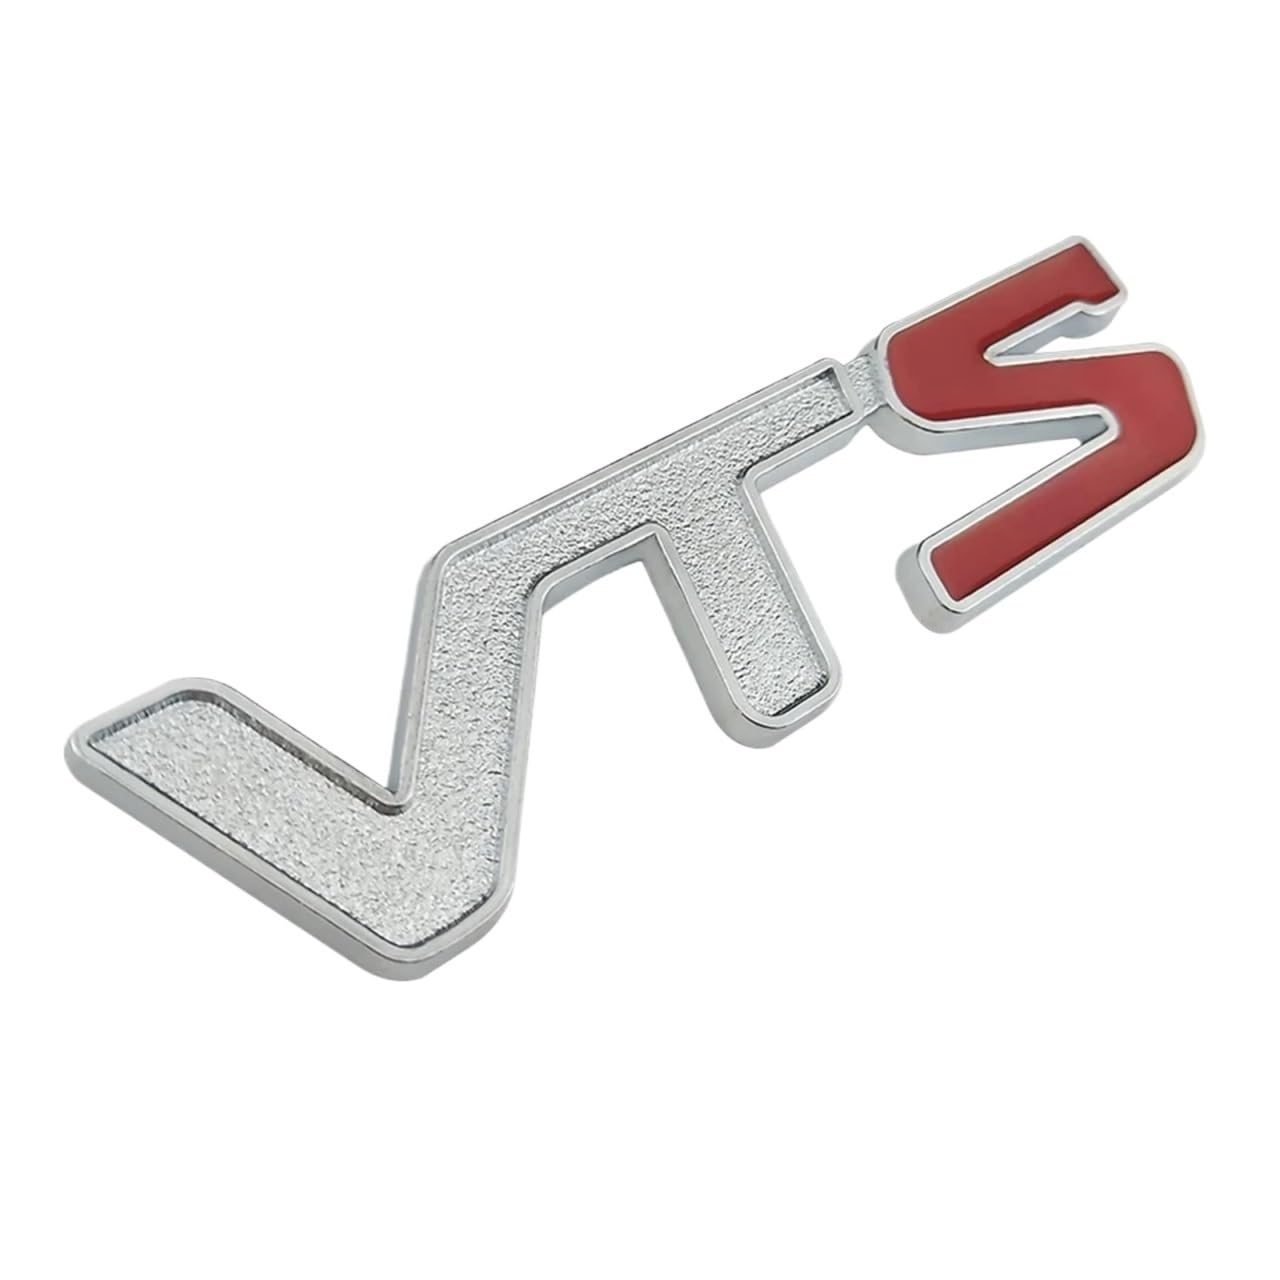 Metall 3D VTS VTS Autoabzeichen Emblem 3D Logo Aufkleber Kompatibel mit C2 C3 C4 Quatre Saxo Xsara Jimny 1.6 16v VTR Rot Silber Farbe(Silver red) von NRUOS